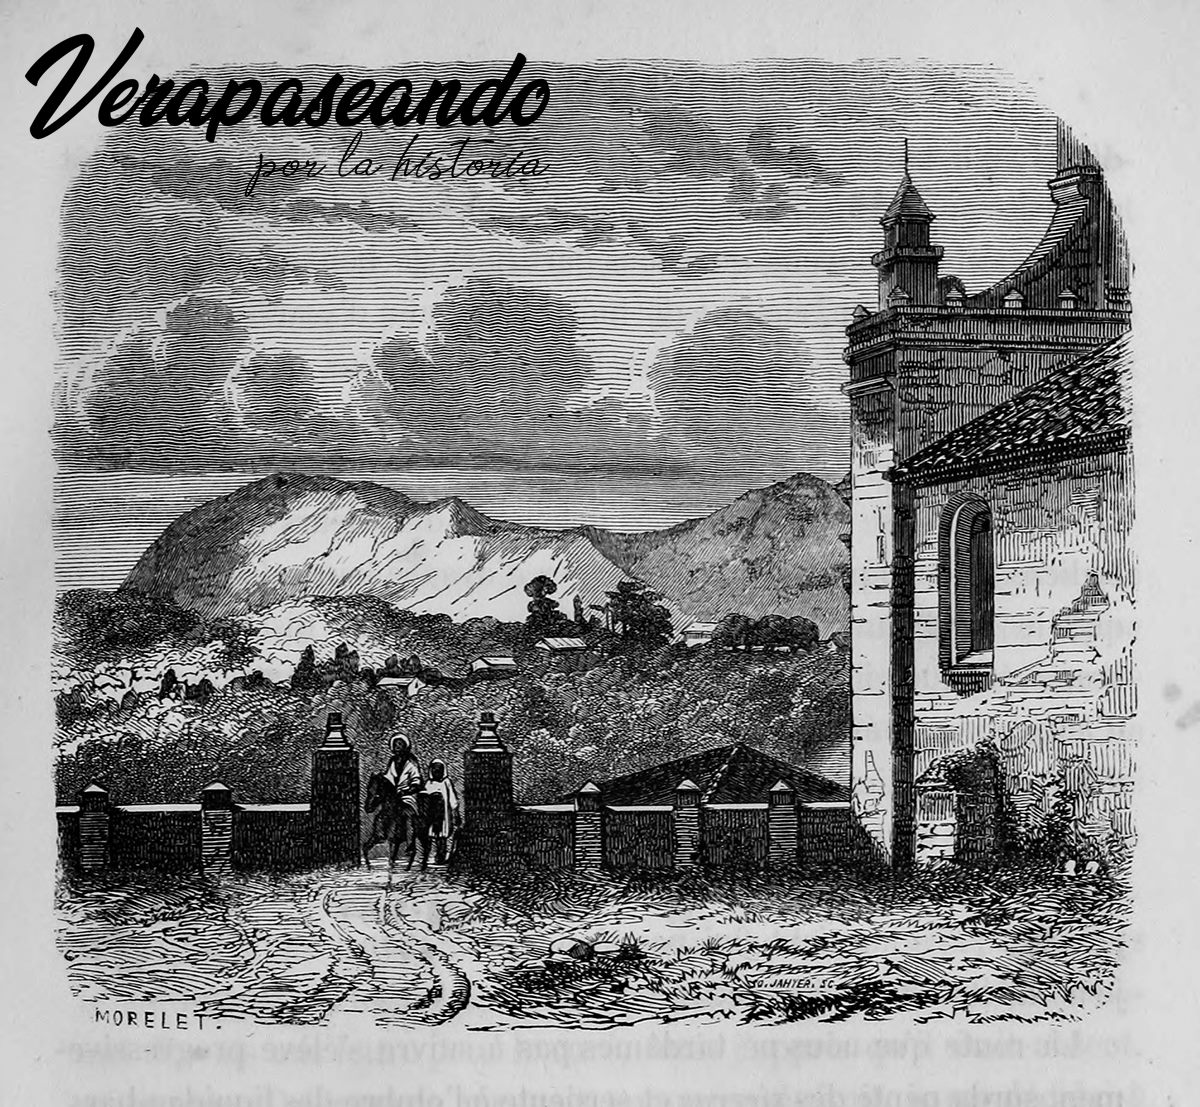 Grabado de Ruta Lanquín-Cahabón
Arthur Morelet 1847